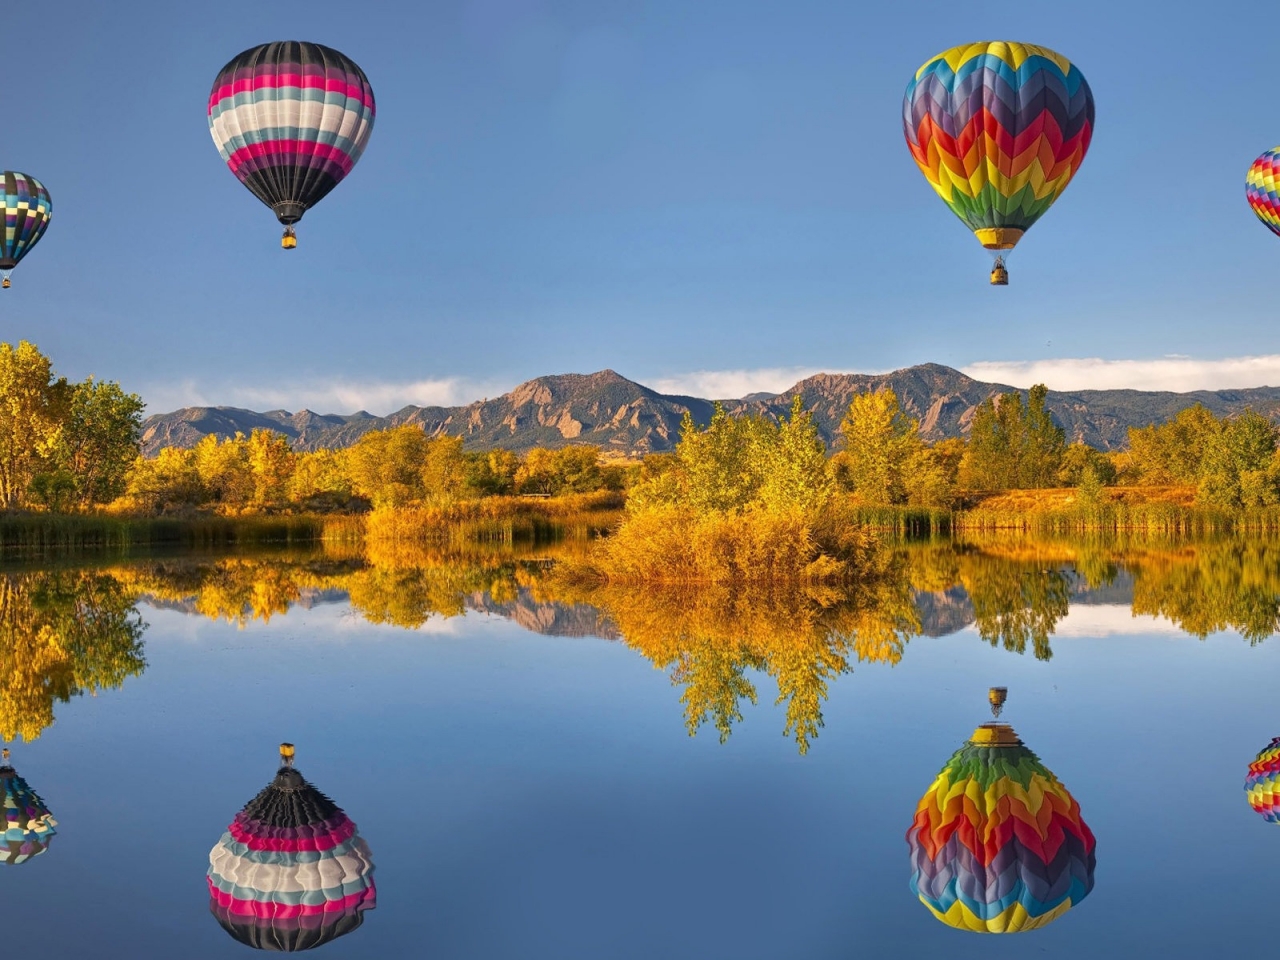 Ballon Race for 1280 x 960 resolution